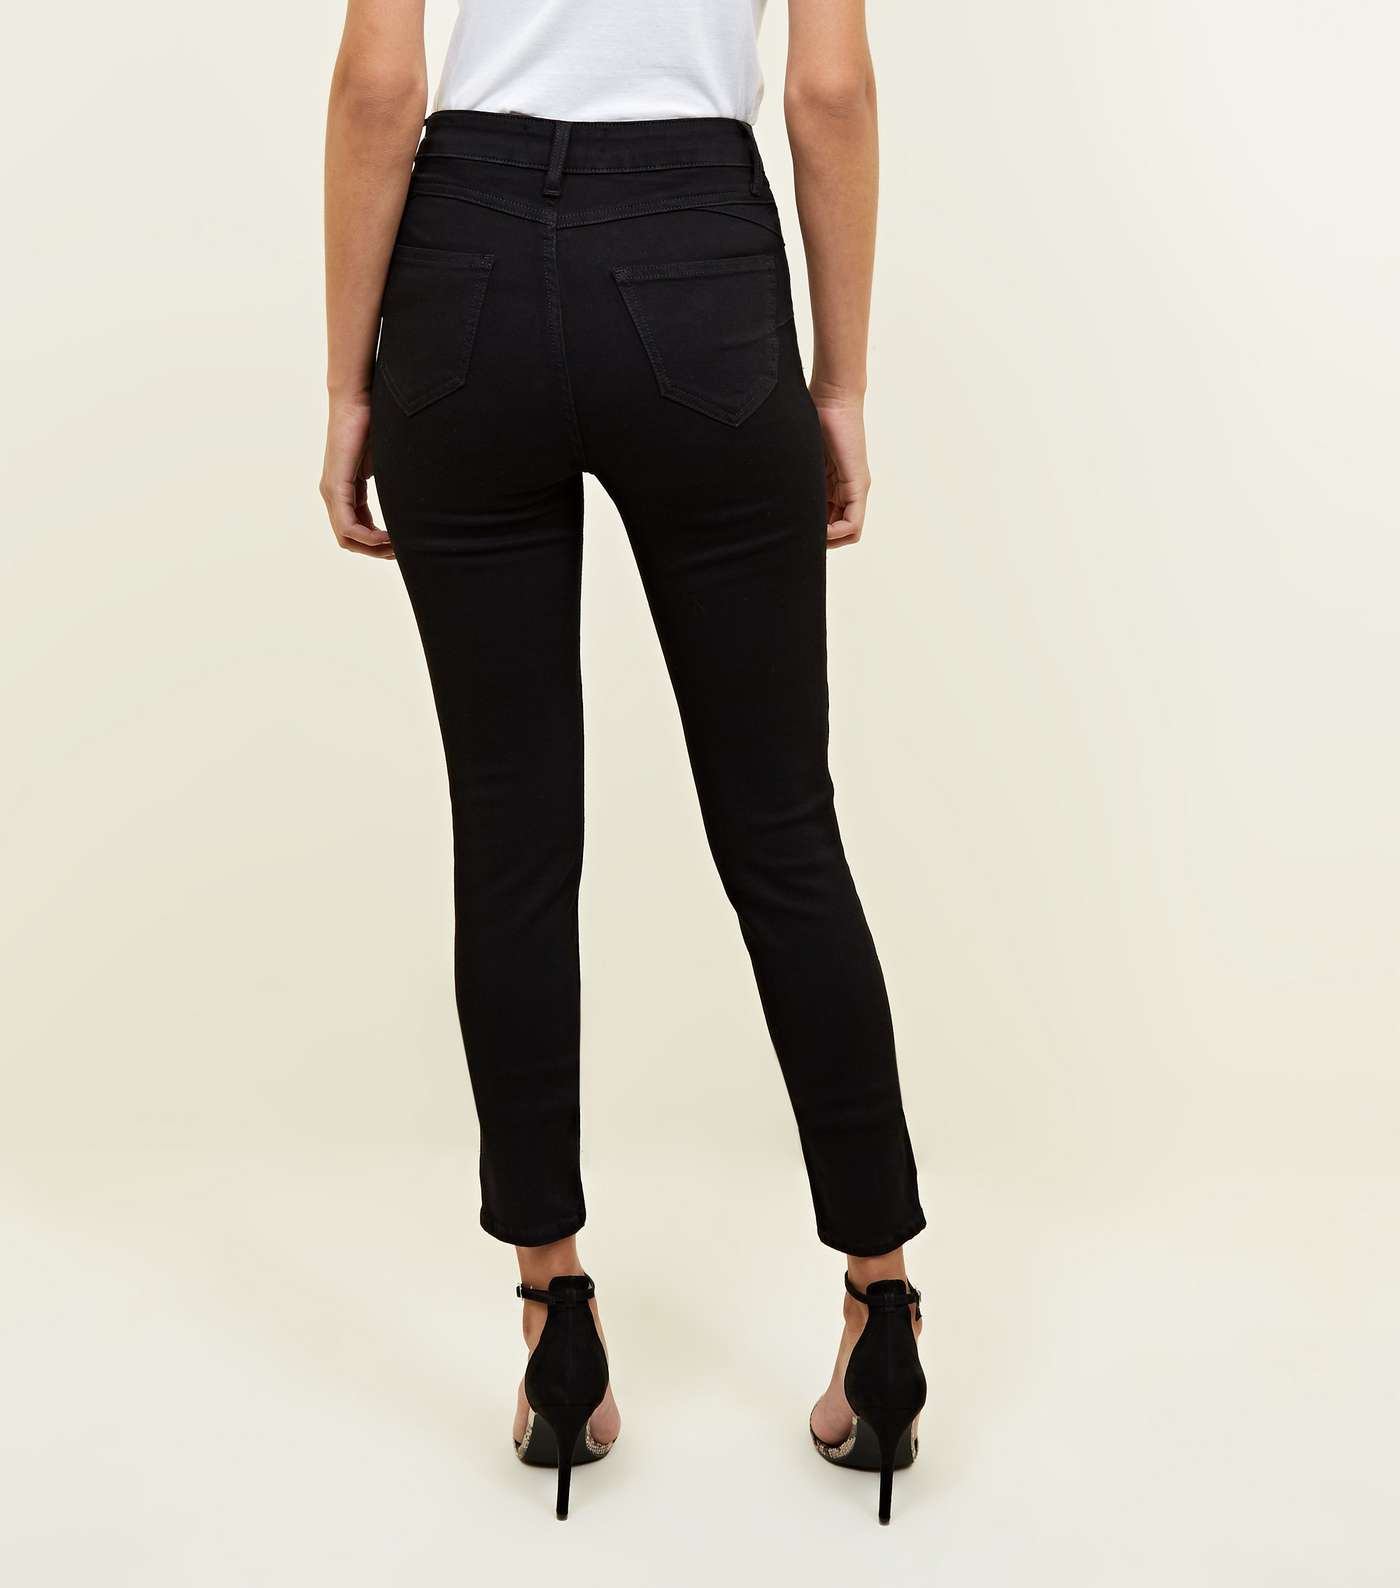 Black Premium High Rise 'Lift & Shape' Jeans Image 3